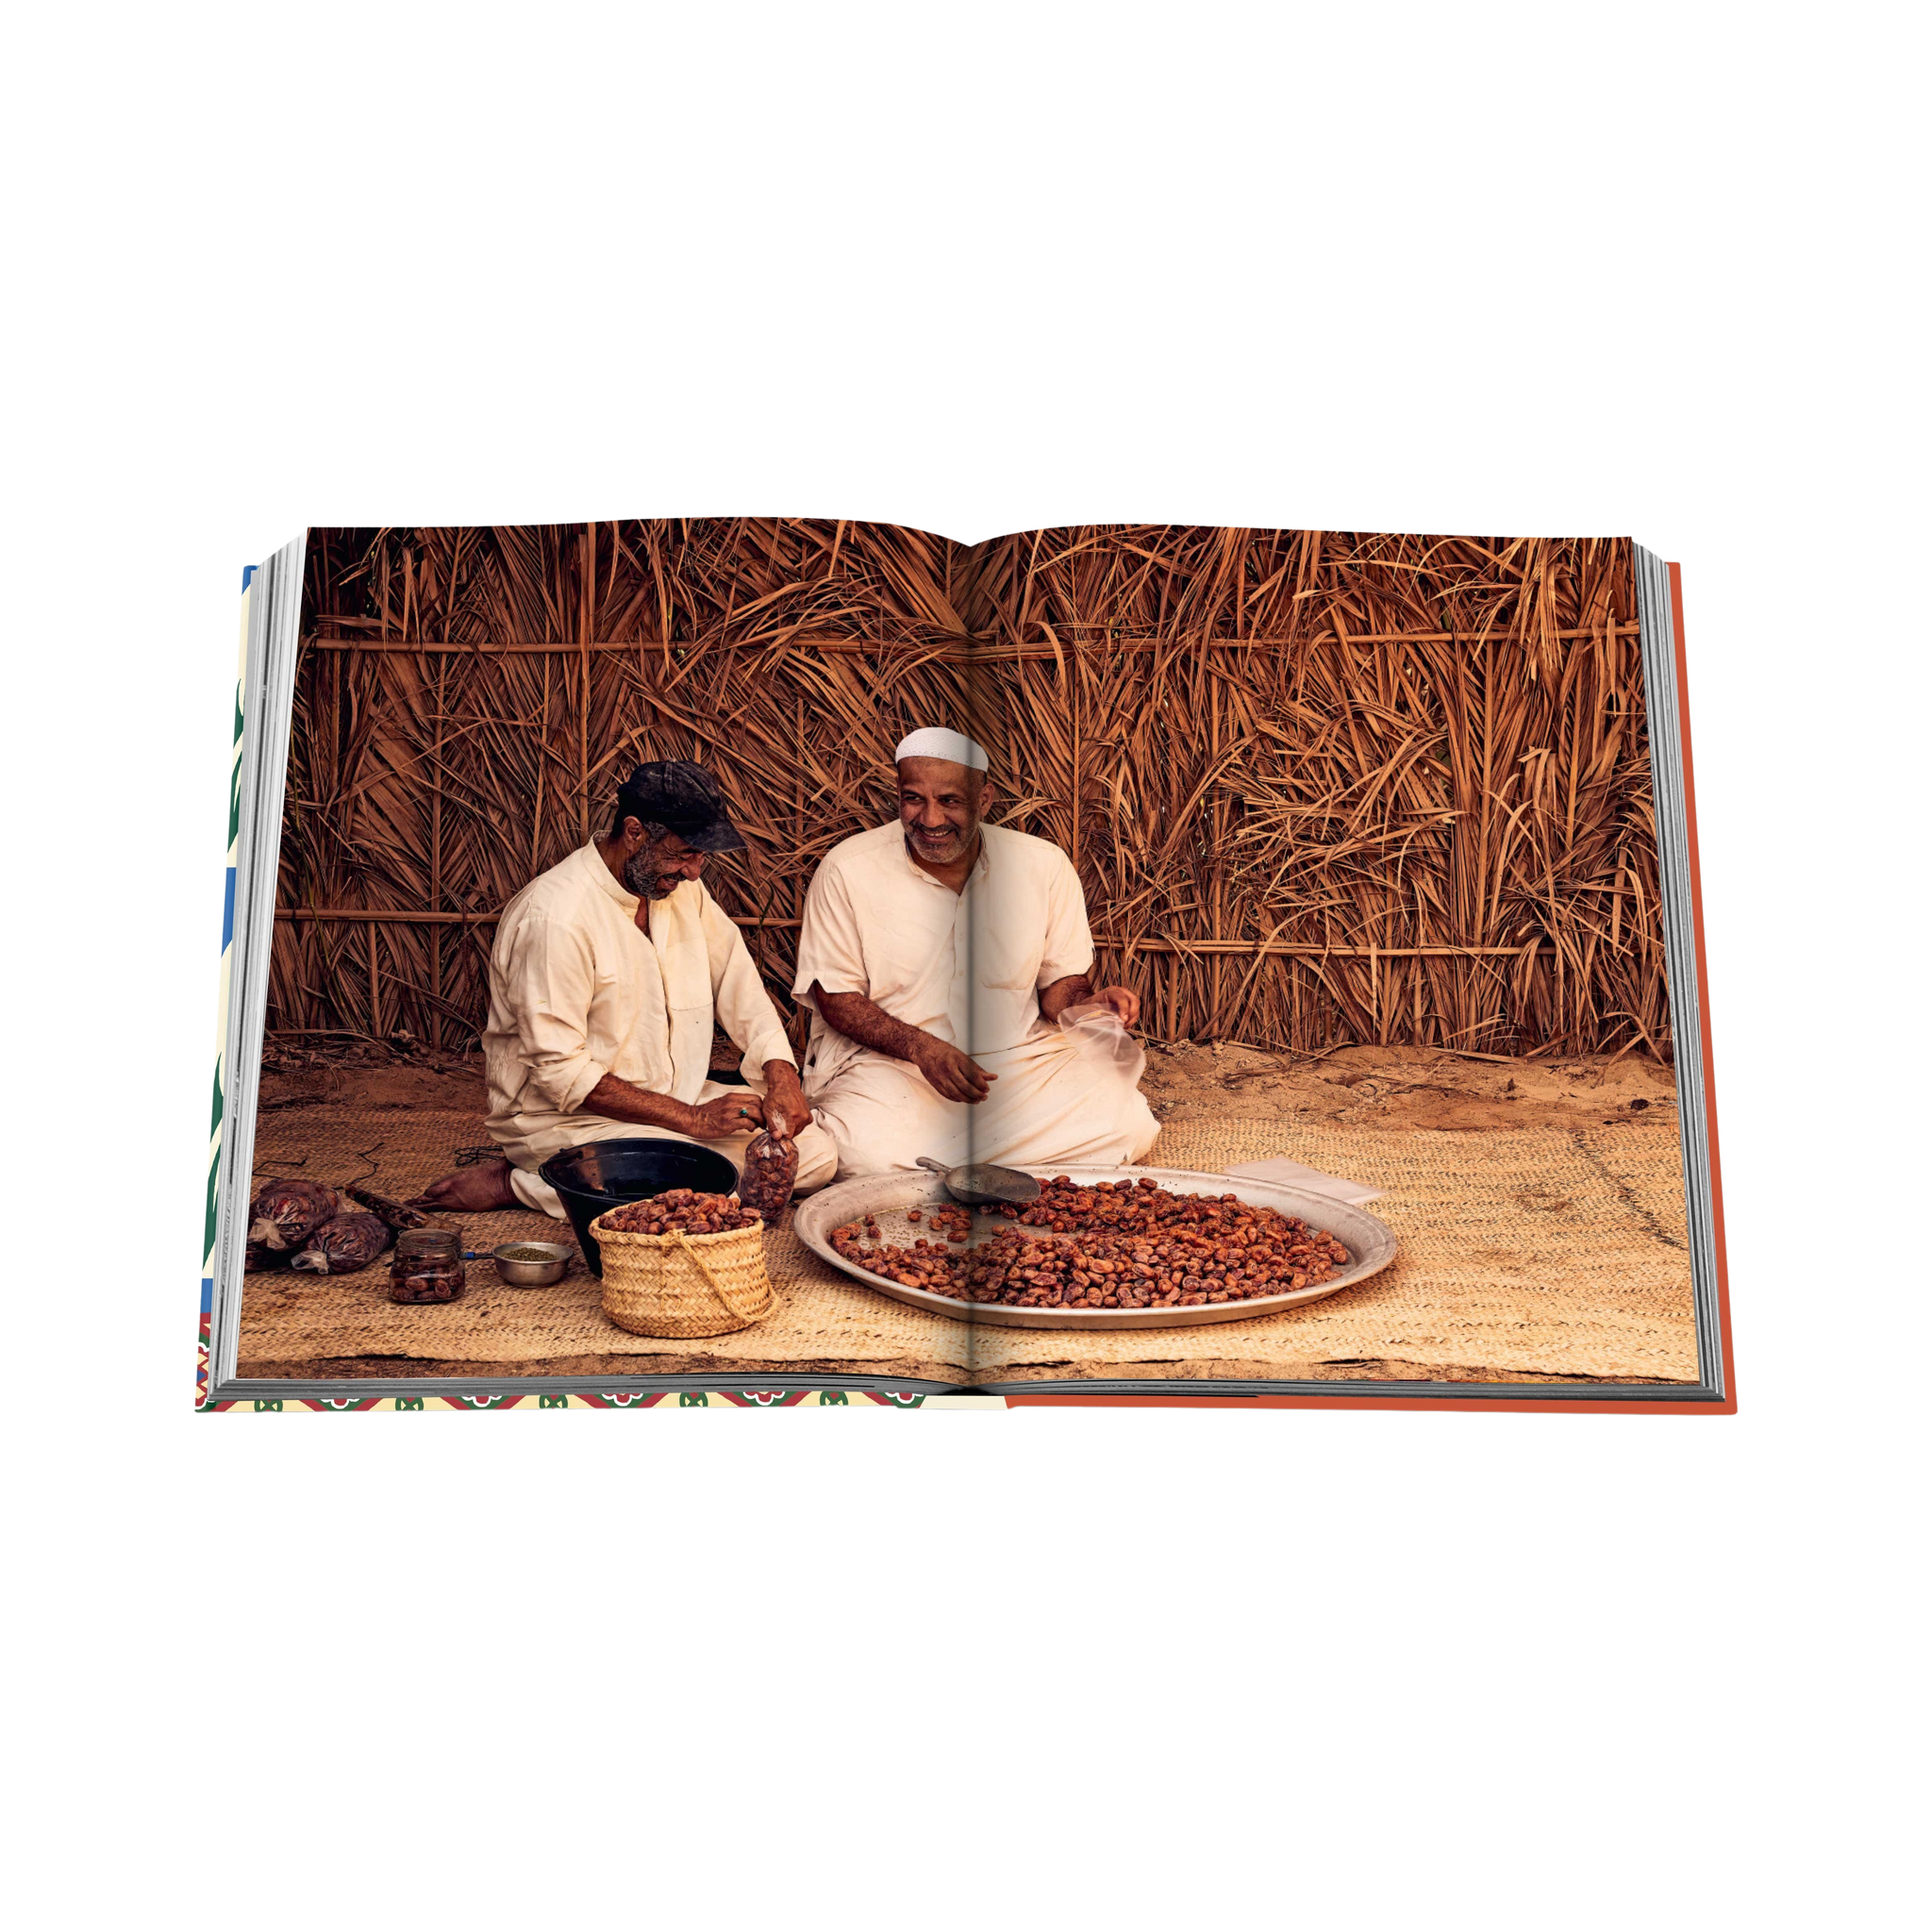 89392 Assouline Saudi Dates Coffee table book